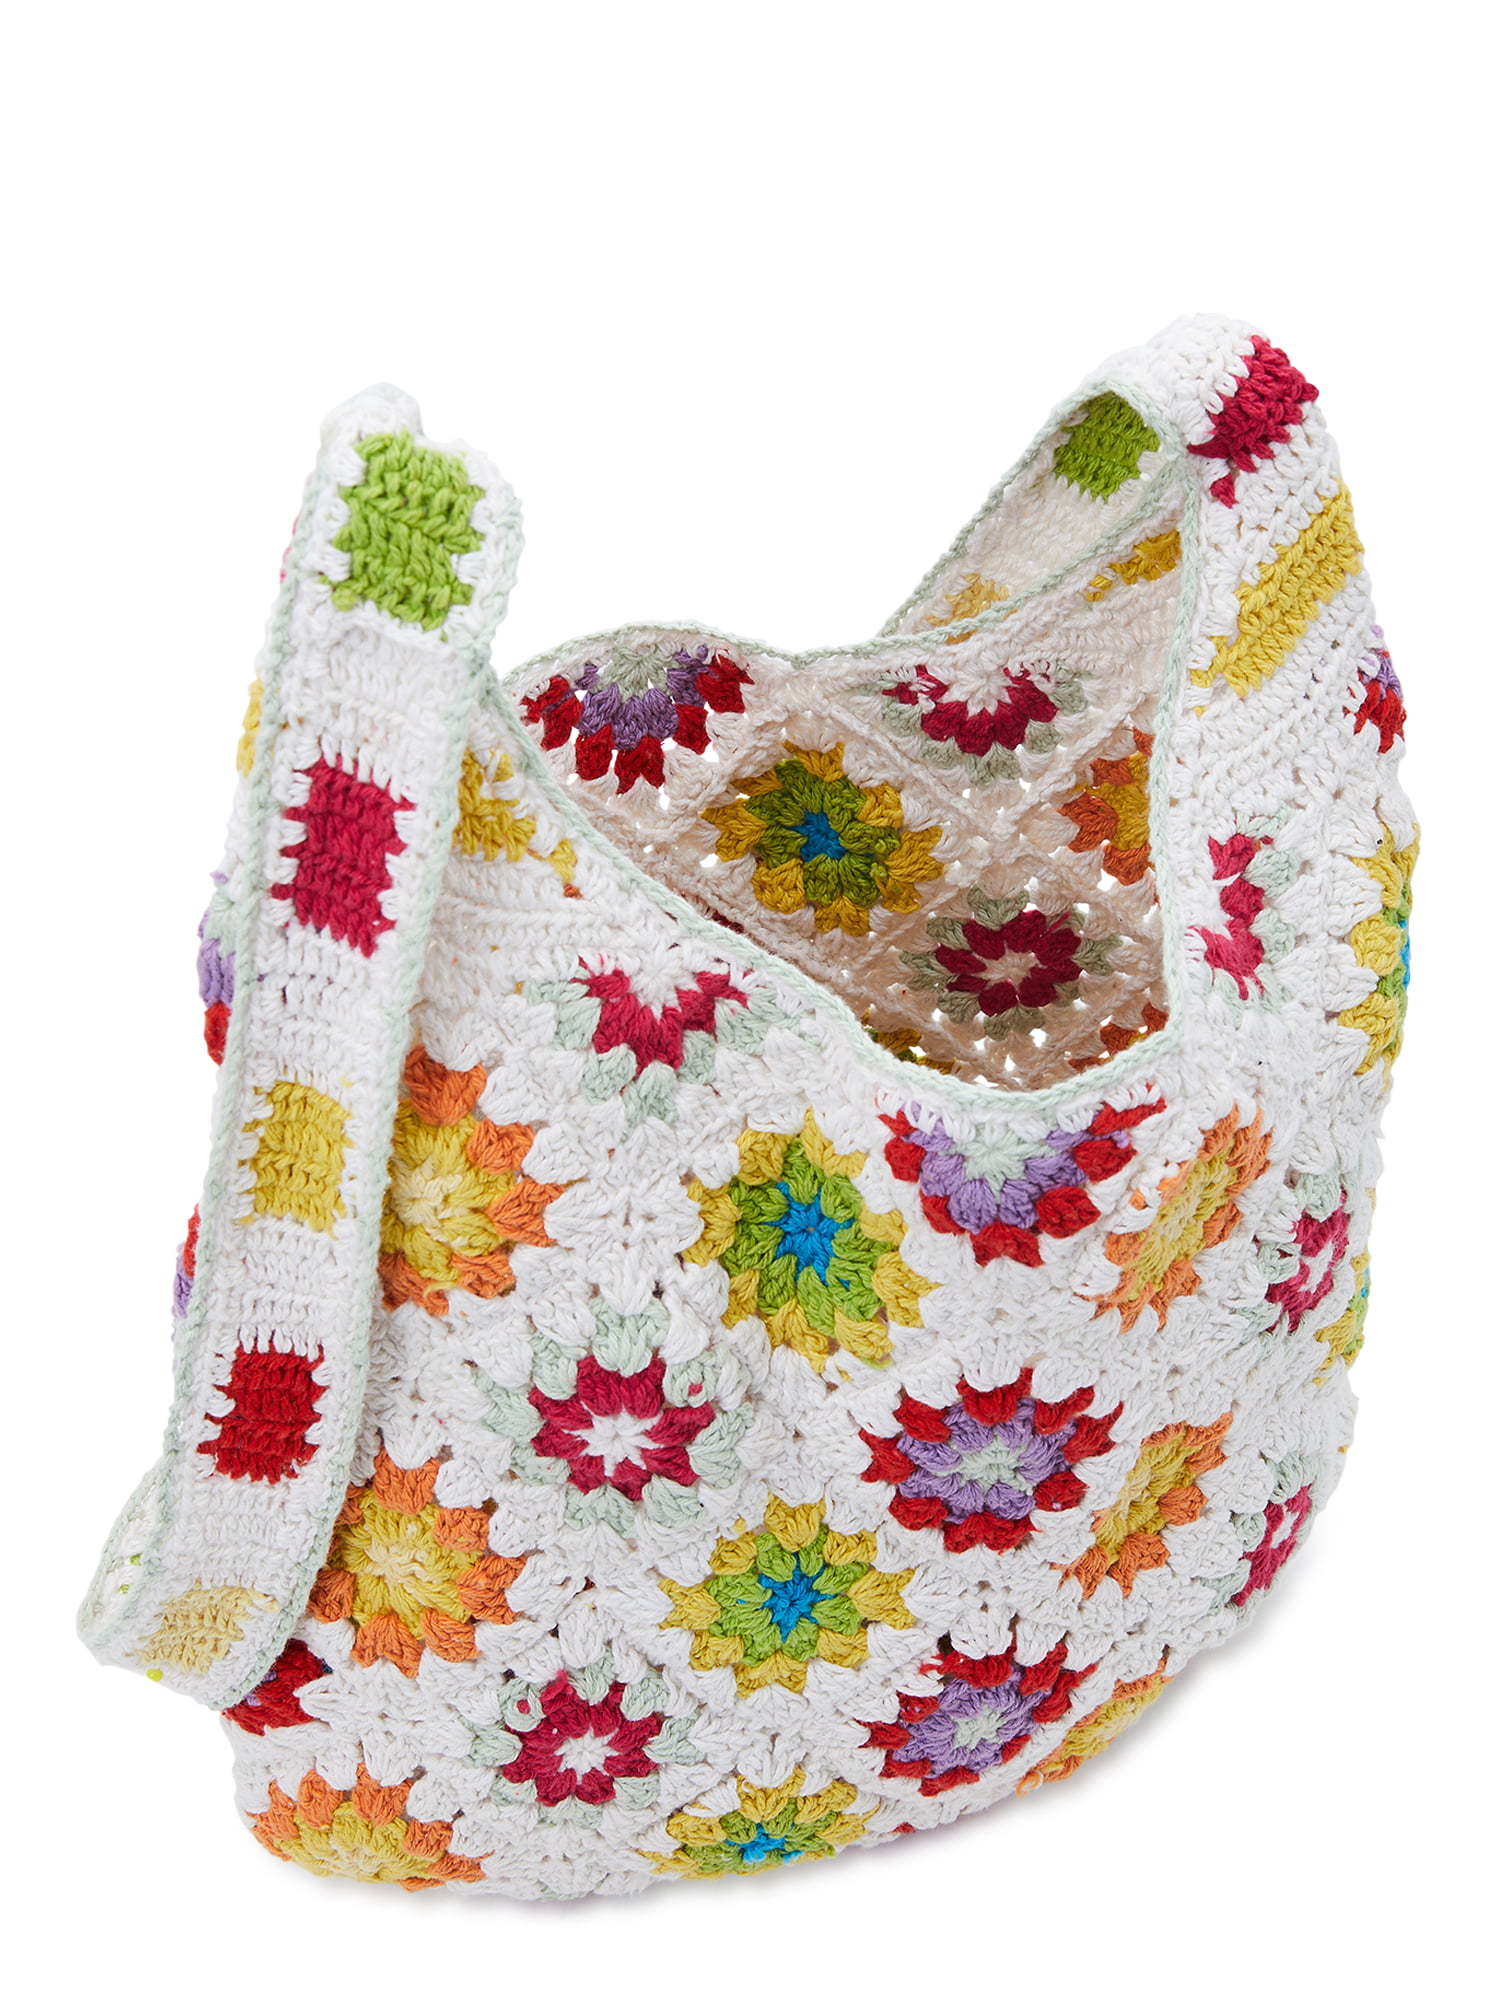 No Boundaries Women's Festival Crochet Tote Bag Tan Multi Stripe